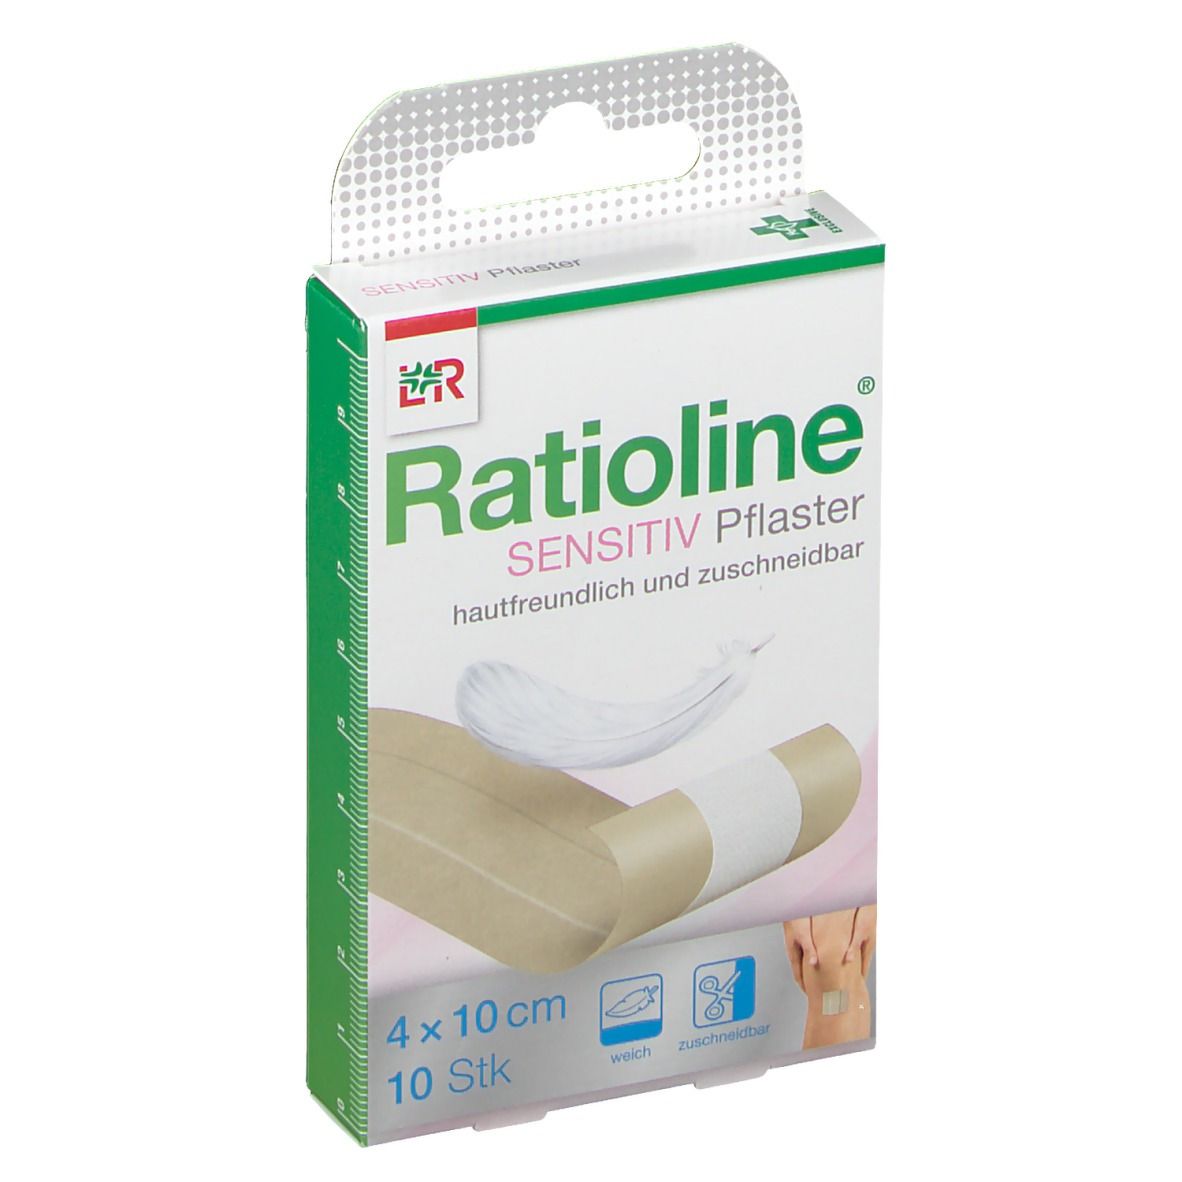 Ratioline® sensitive Wundschnellverband 4cm x 1m